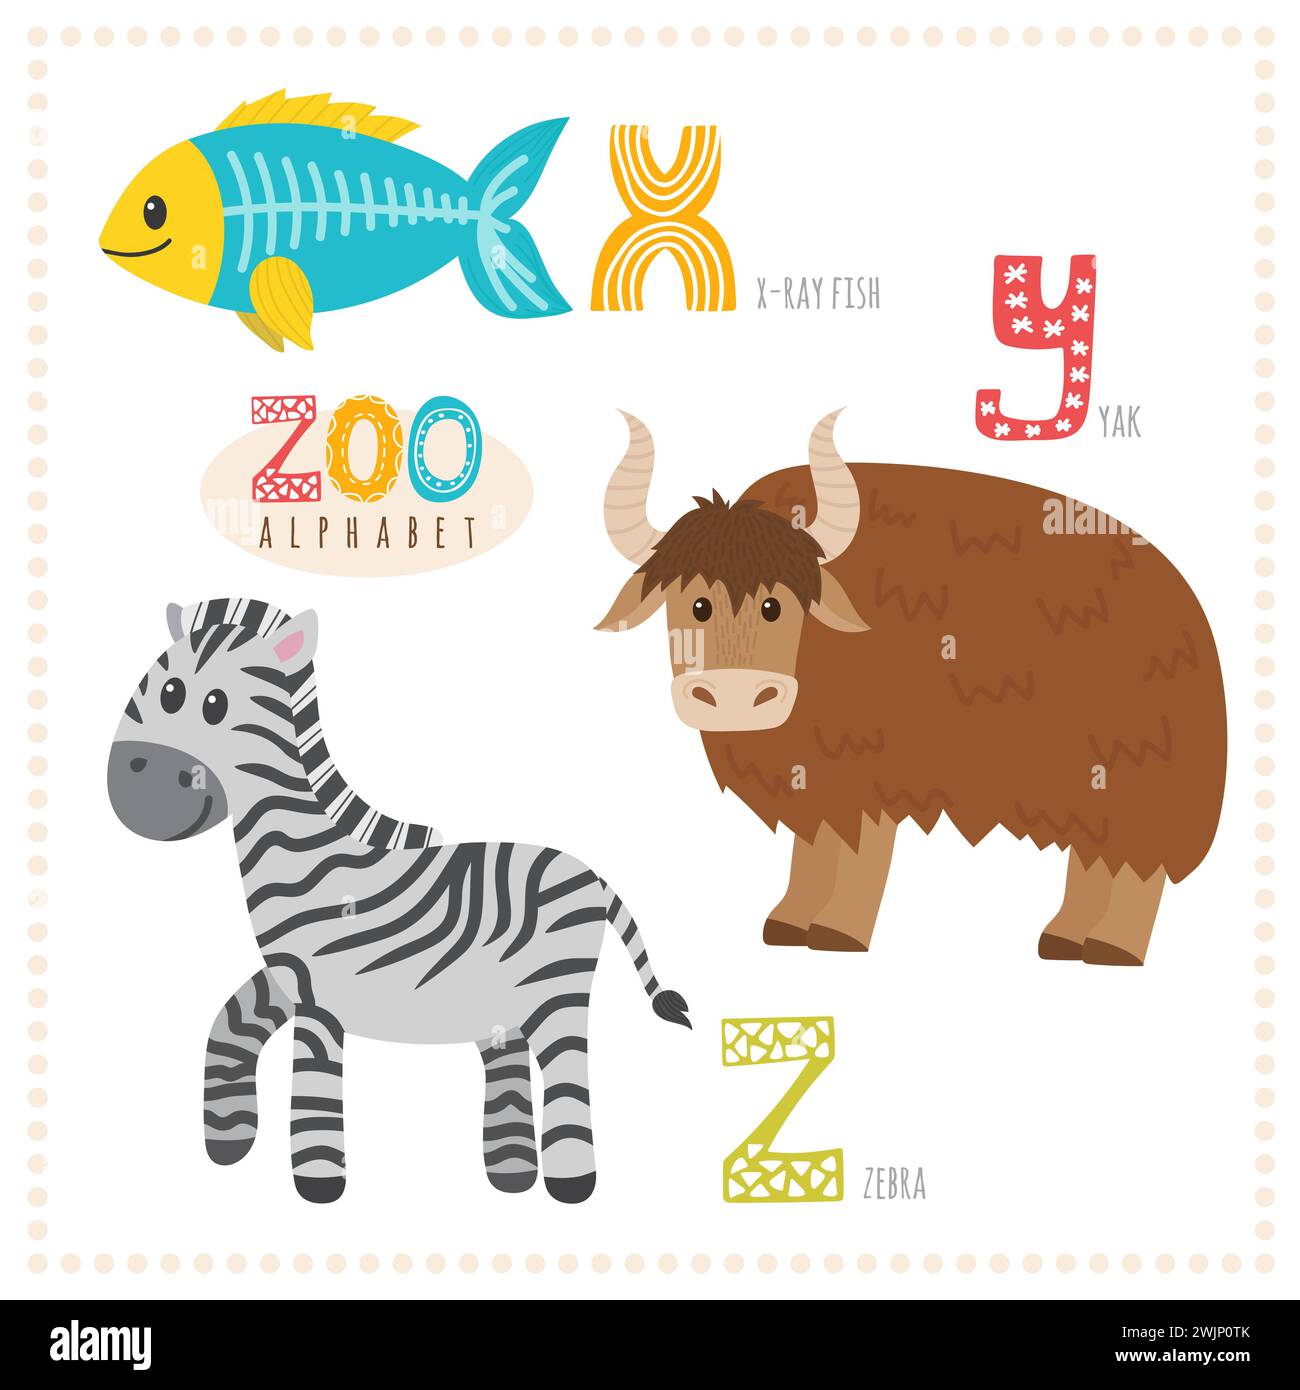 Cute cartoon animals. Zoo alphabet with funny animals. X, y, z letters. X-ray fish, yak, zebra. Vector illustration Stock Vector